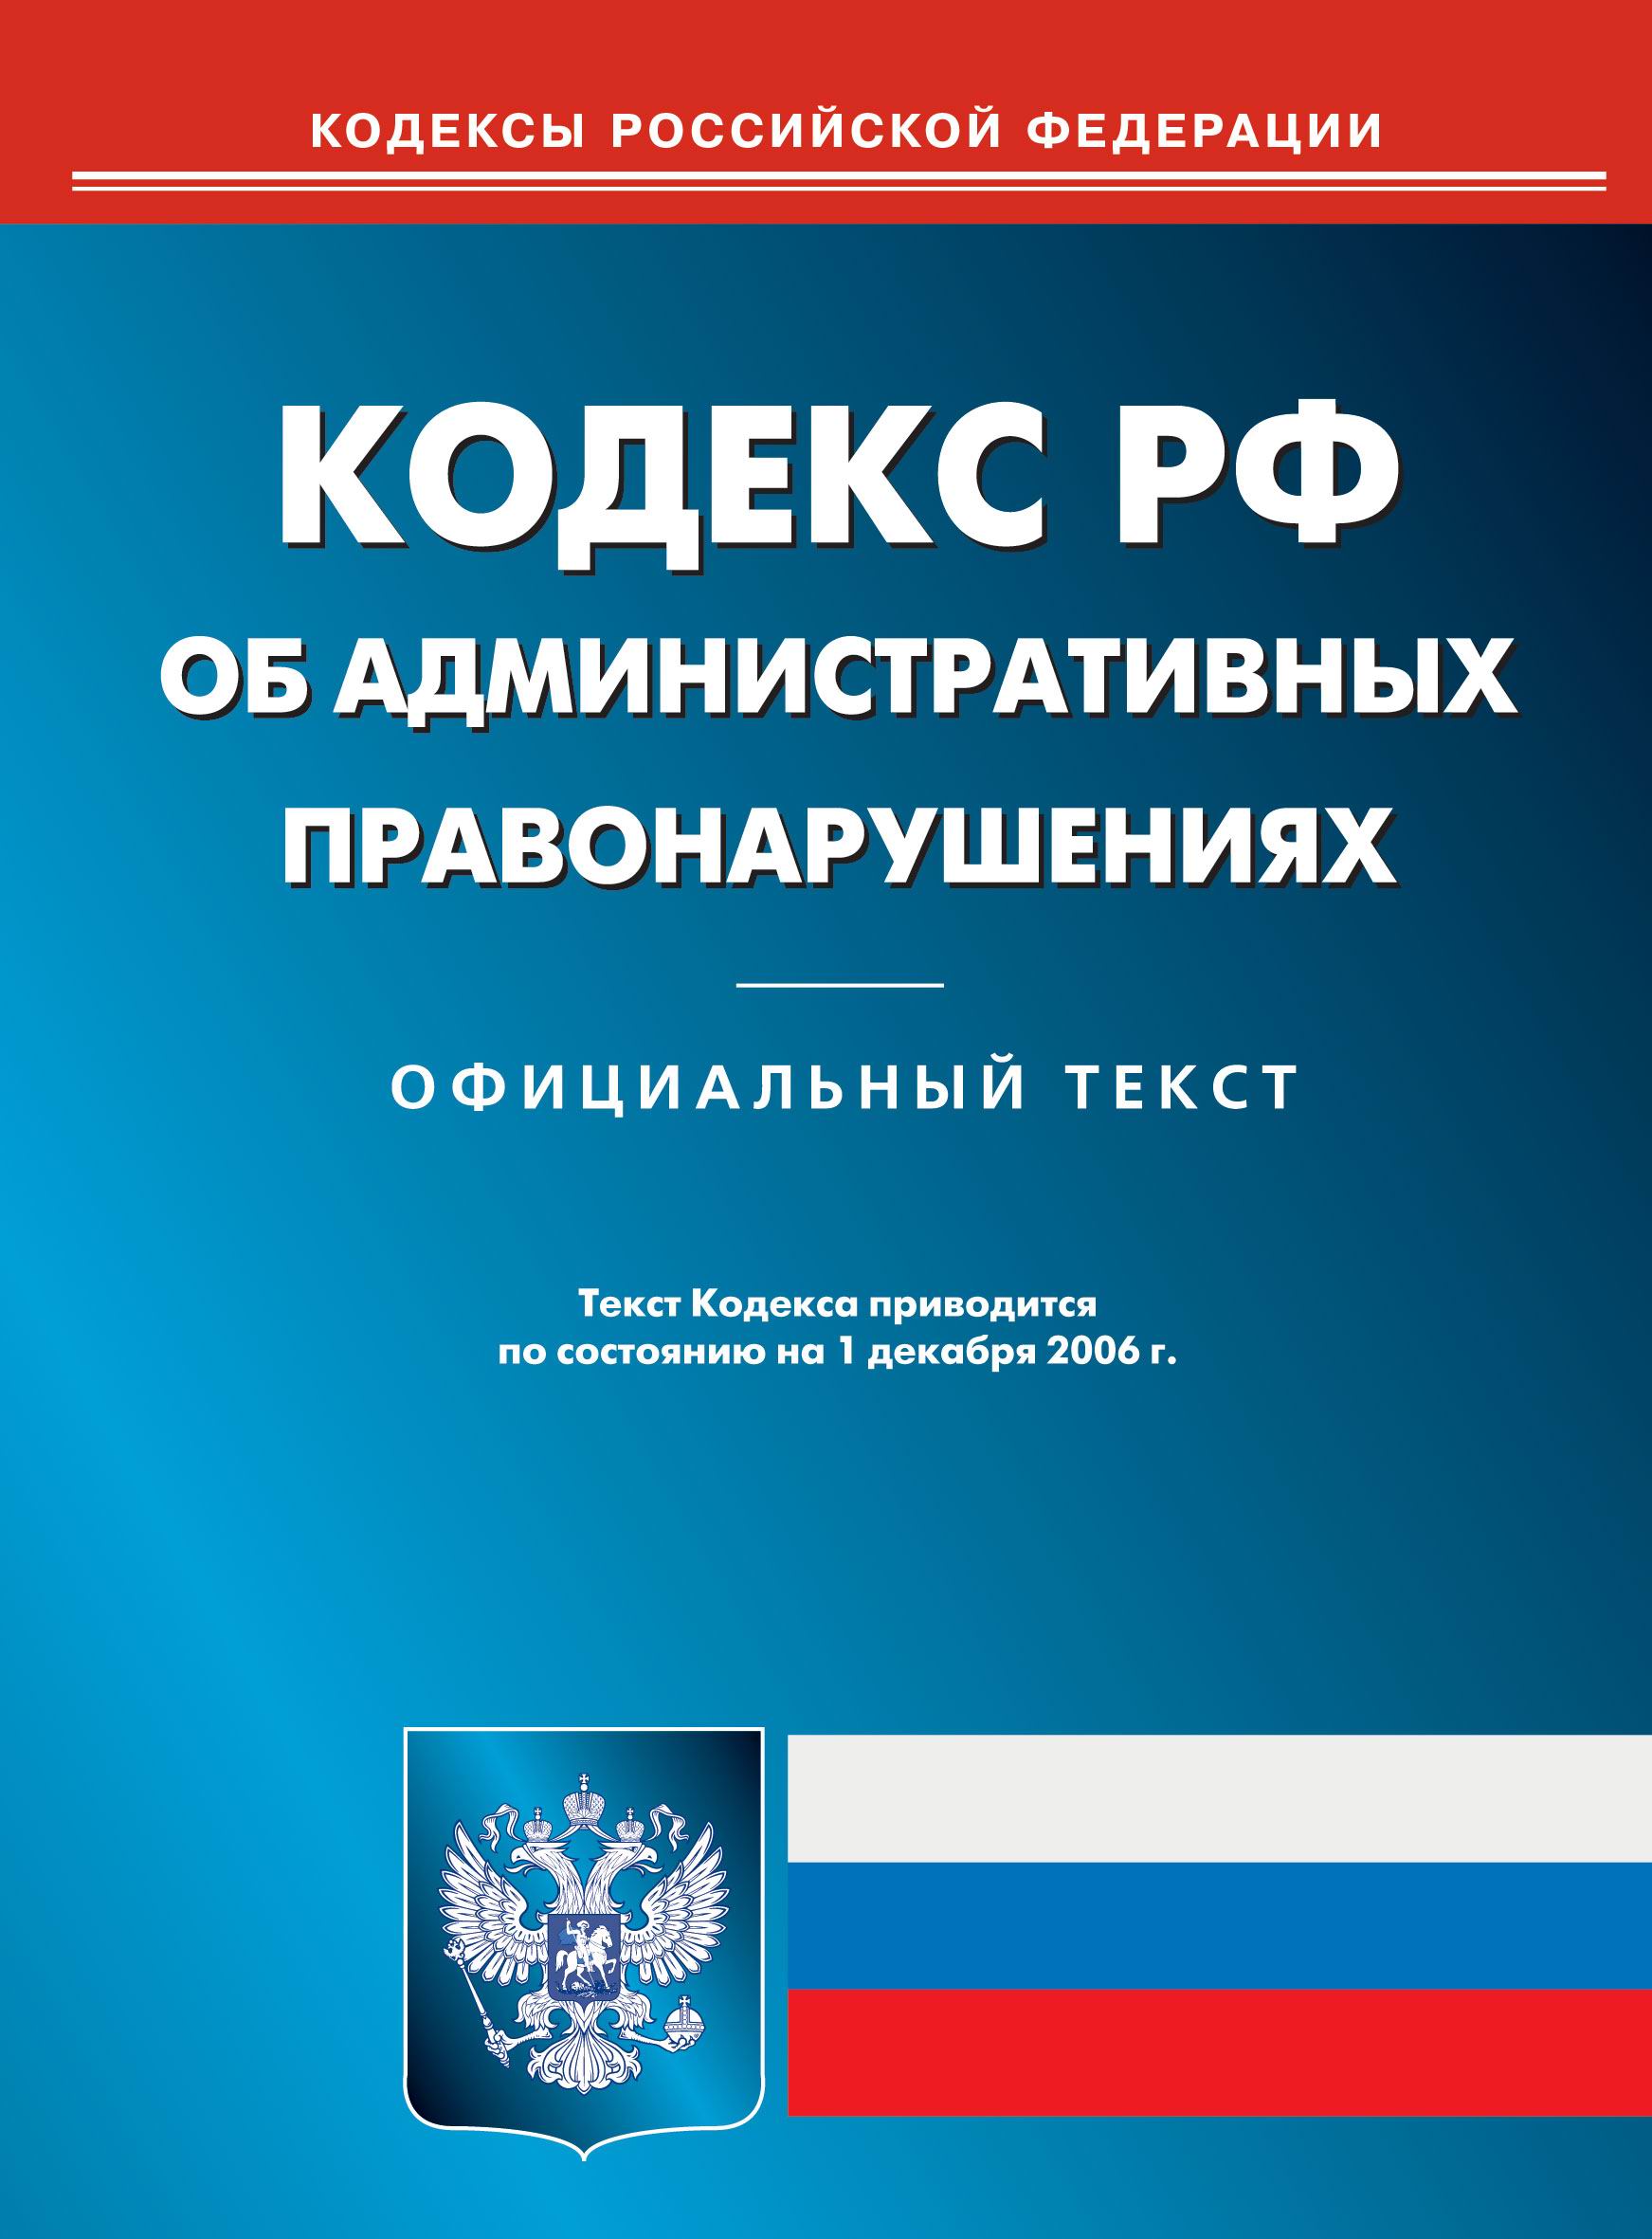 О кодексе административных правонарушений (КоАП РФ)